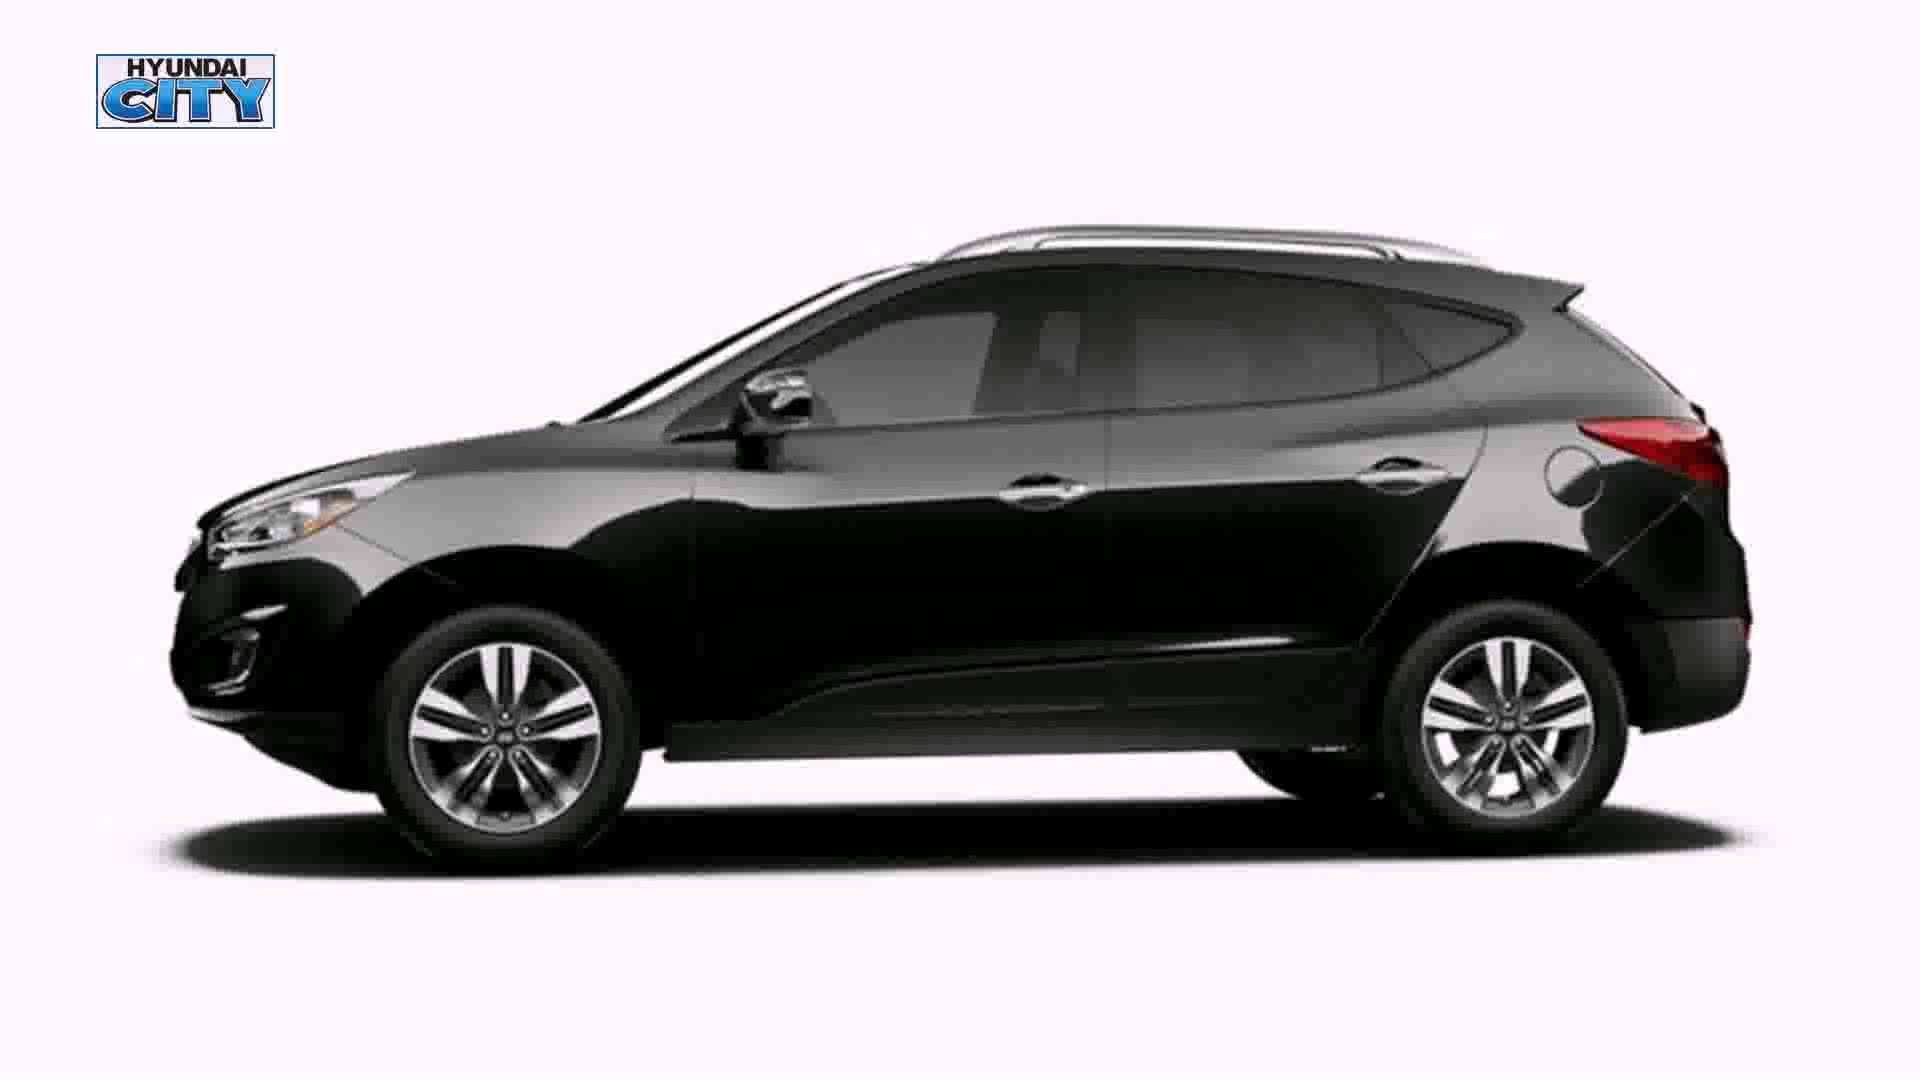 New 2015 Hyundai Tucson CRDi For Sale